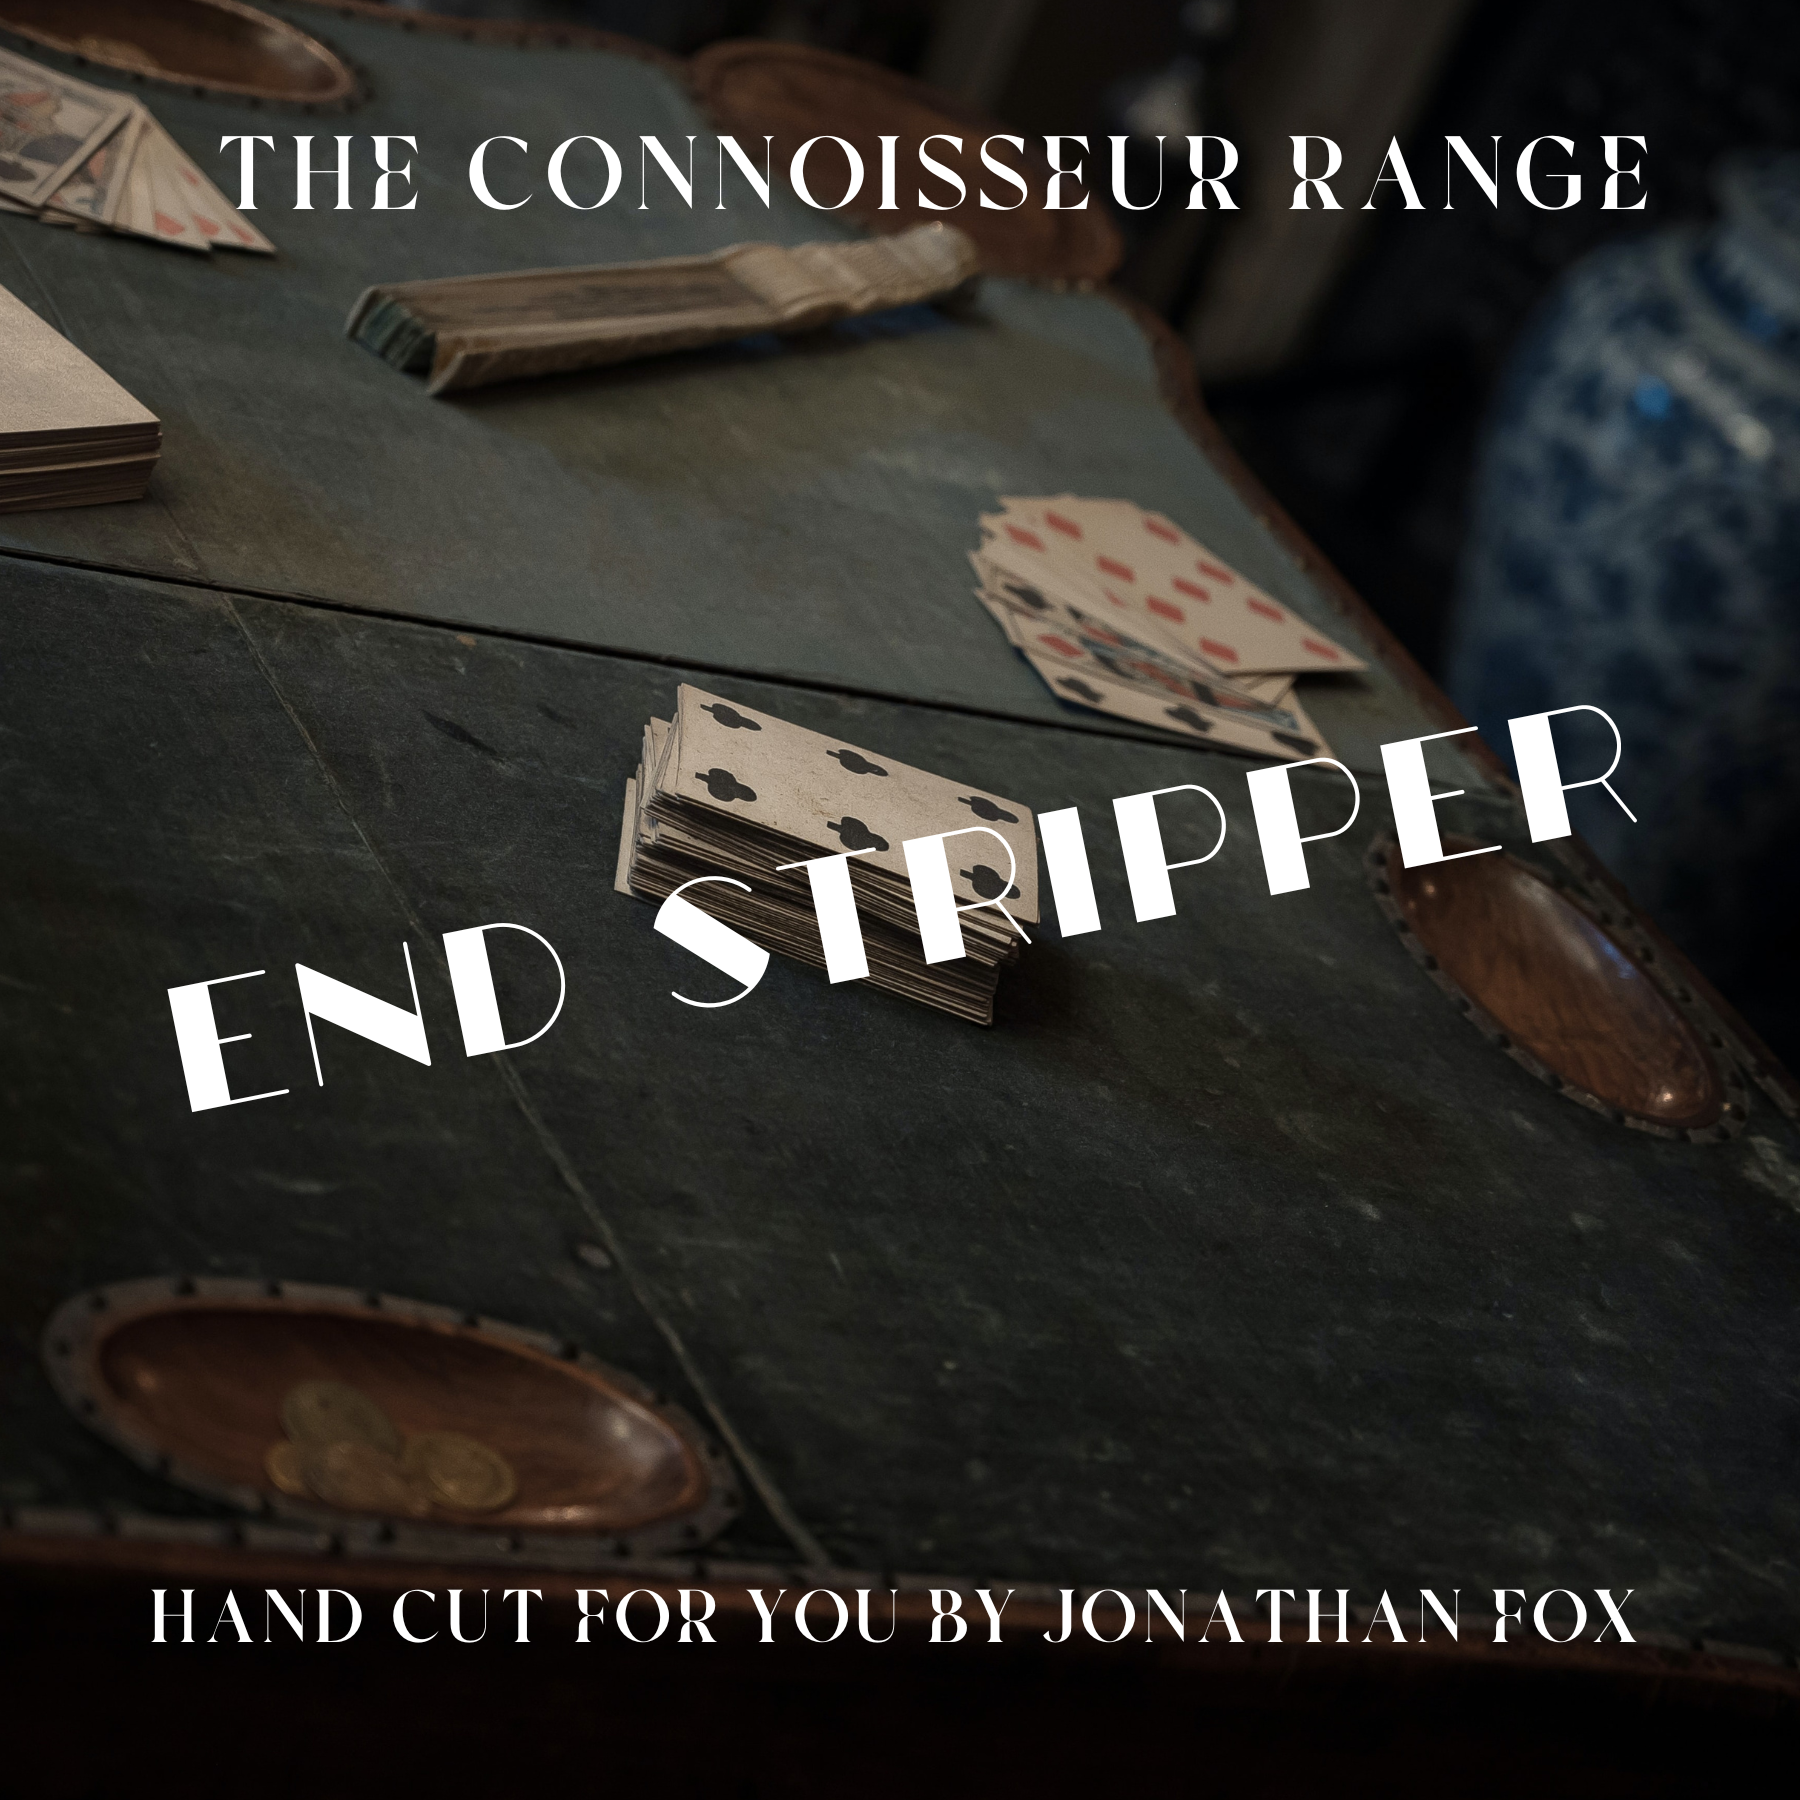 End Stripper by Jonathan Fox